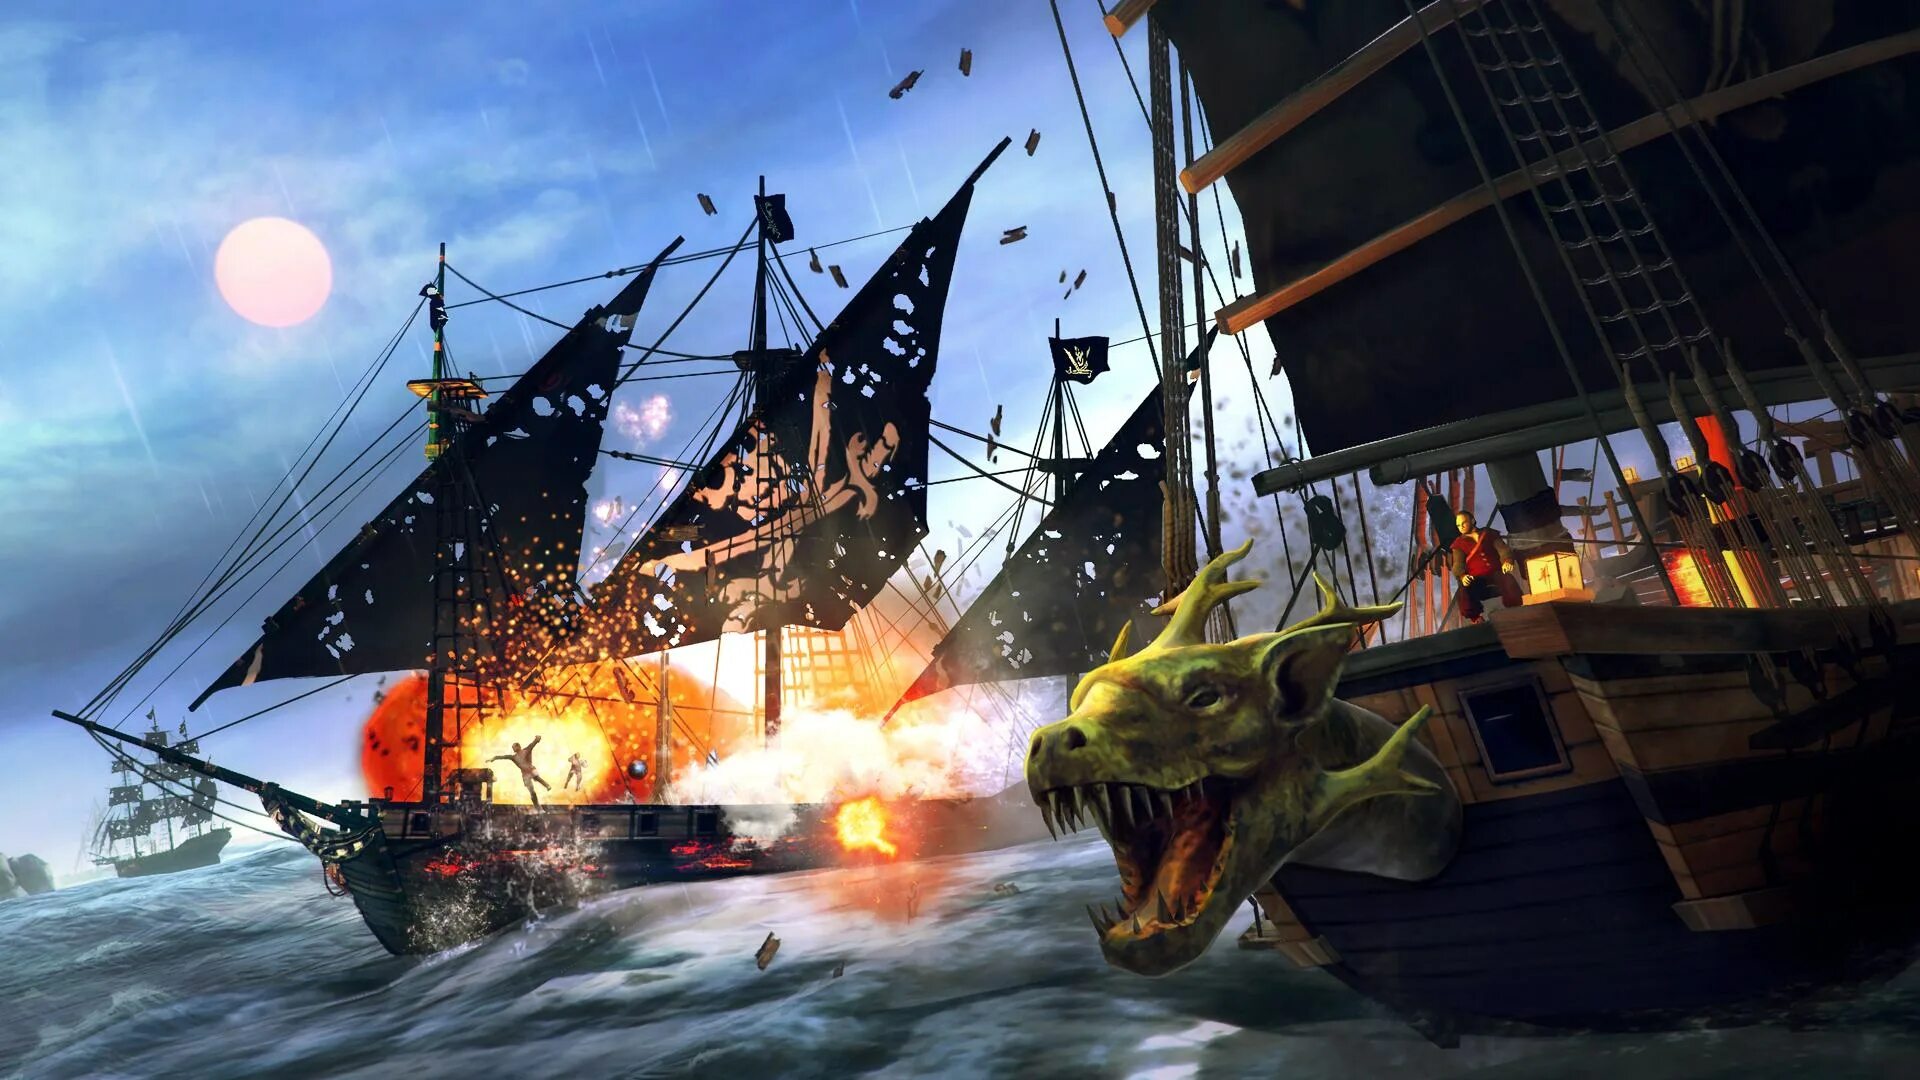 Tempest: Pirate Action RPG. Under the Jolly Roger игра. Пиратский корабль. Игра про корабли и пиратов. Игра пираты с открытым миром